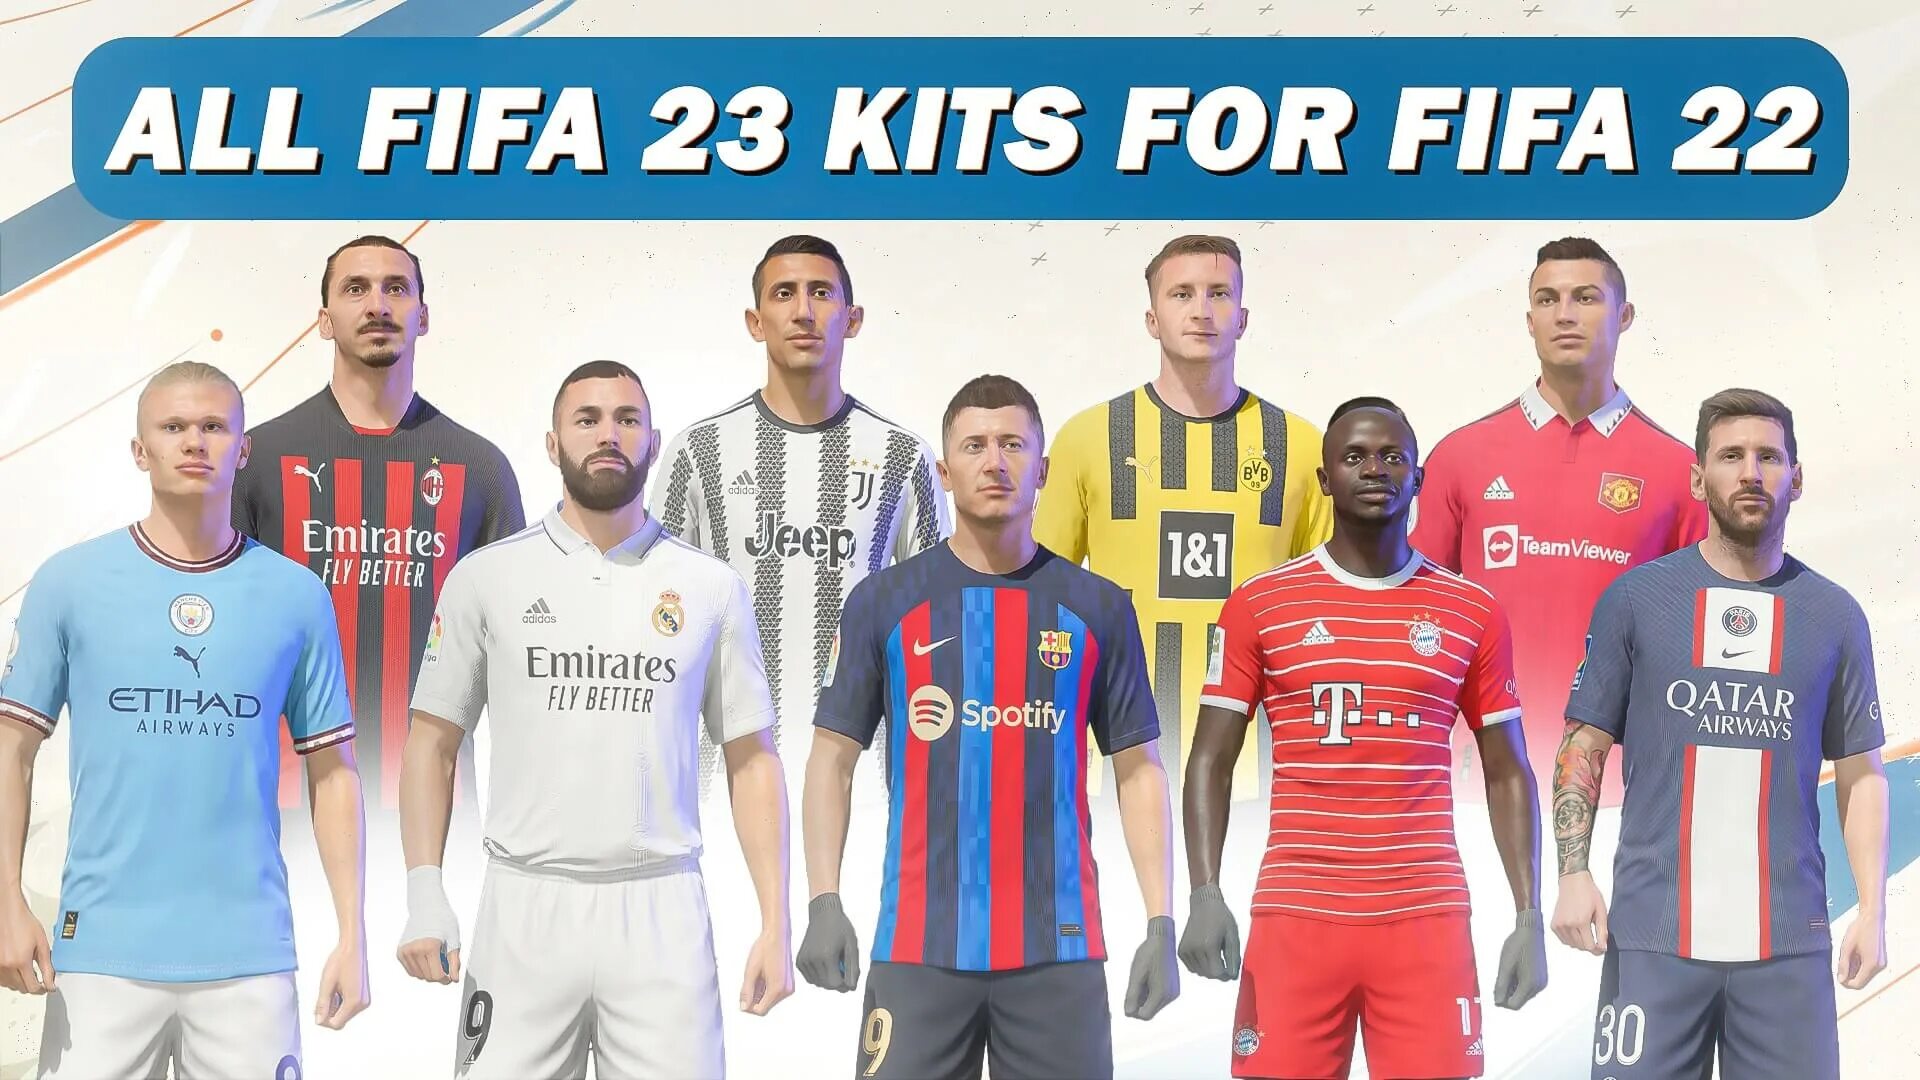 Формы fifa. ФИФА Kits. ФК Ричмонд ФИФА 23. FIFA 23 Kit. FIFA 23 формы команд.